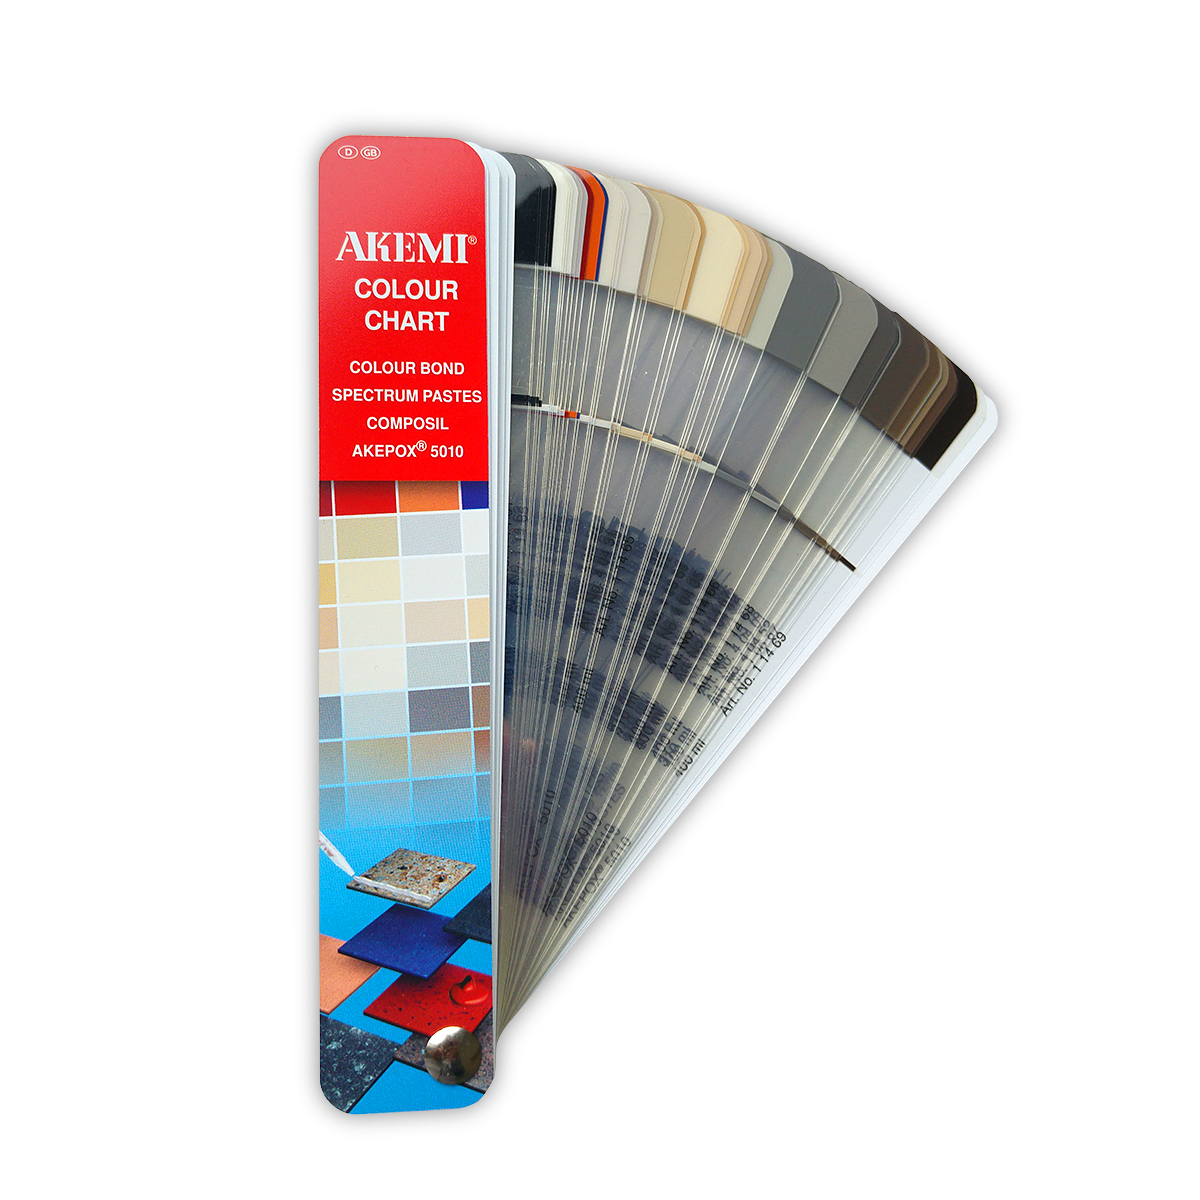 Akemi Colour Chart Farbfächer für Colour Bond, Spectrum Pastes, Composil, Akepox 5010